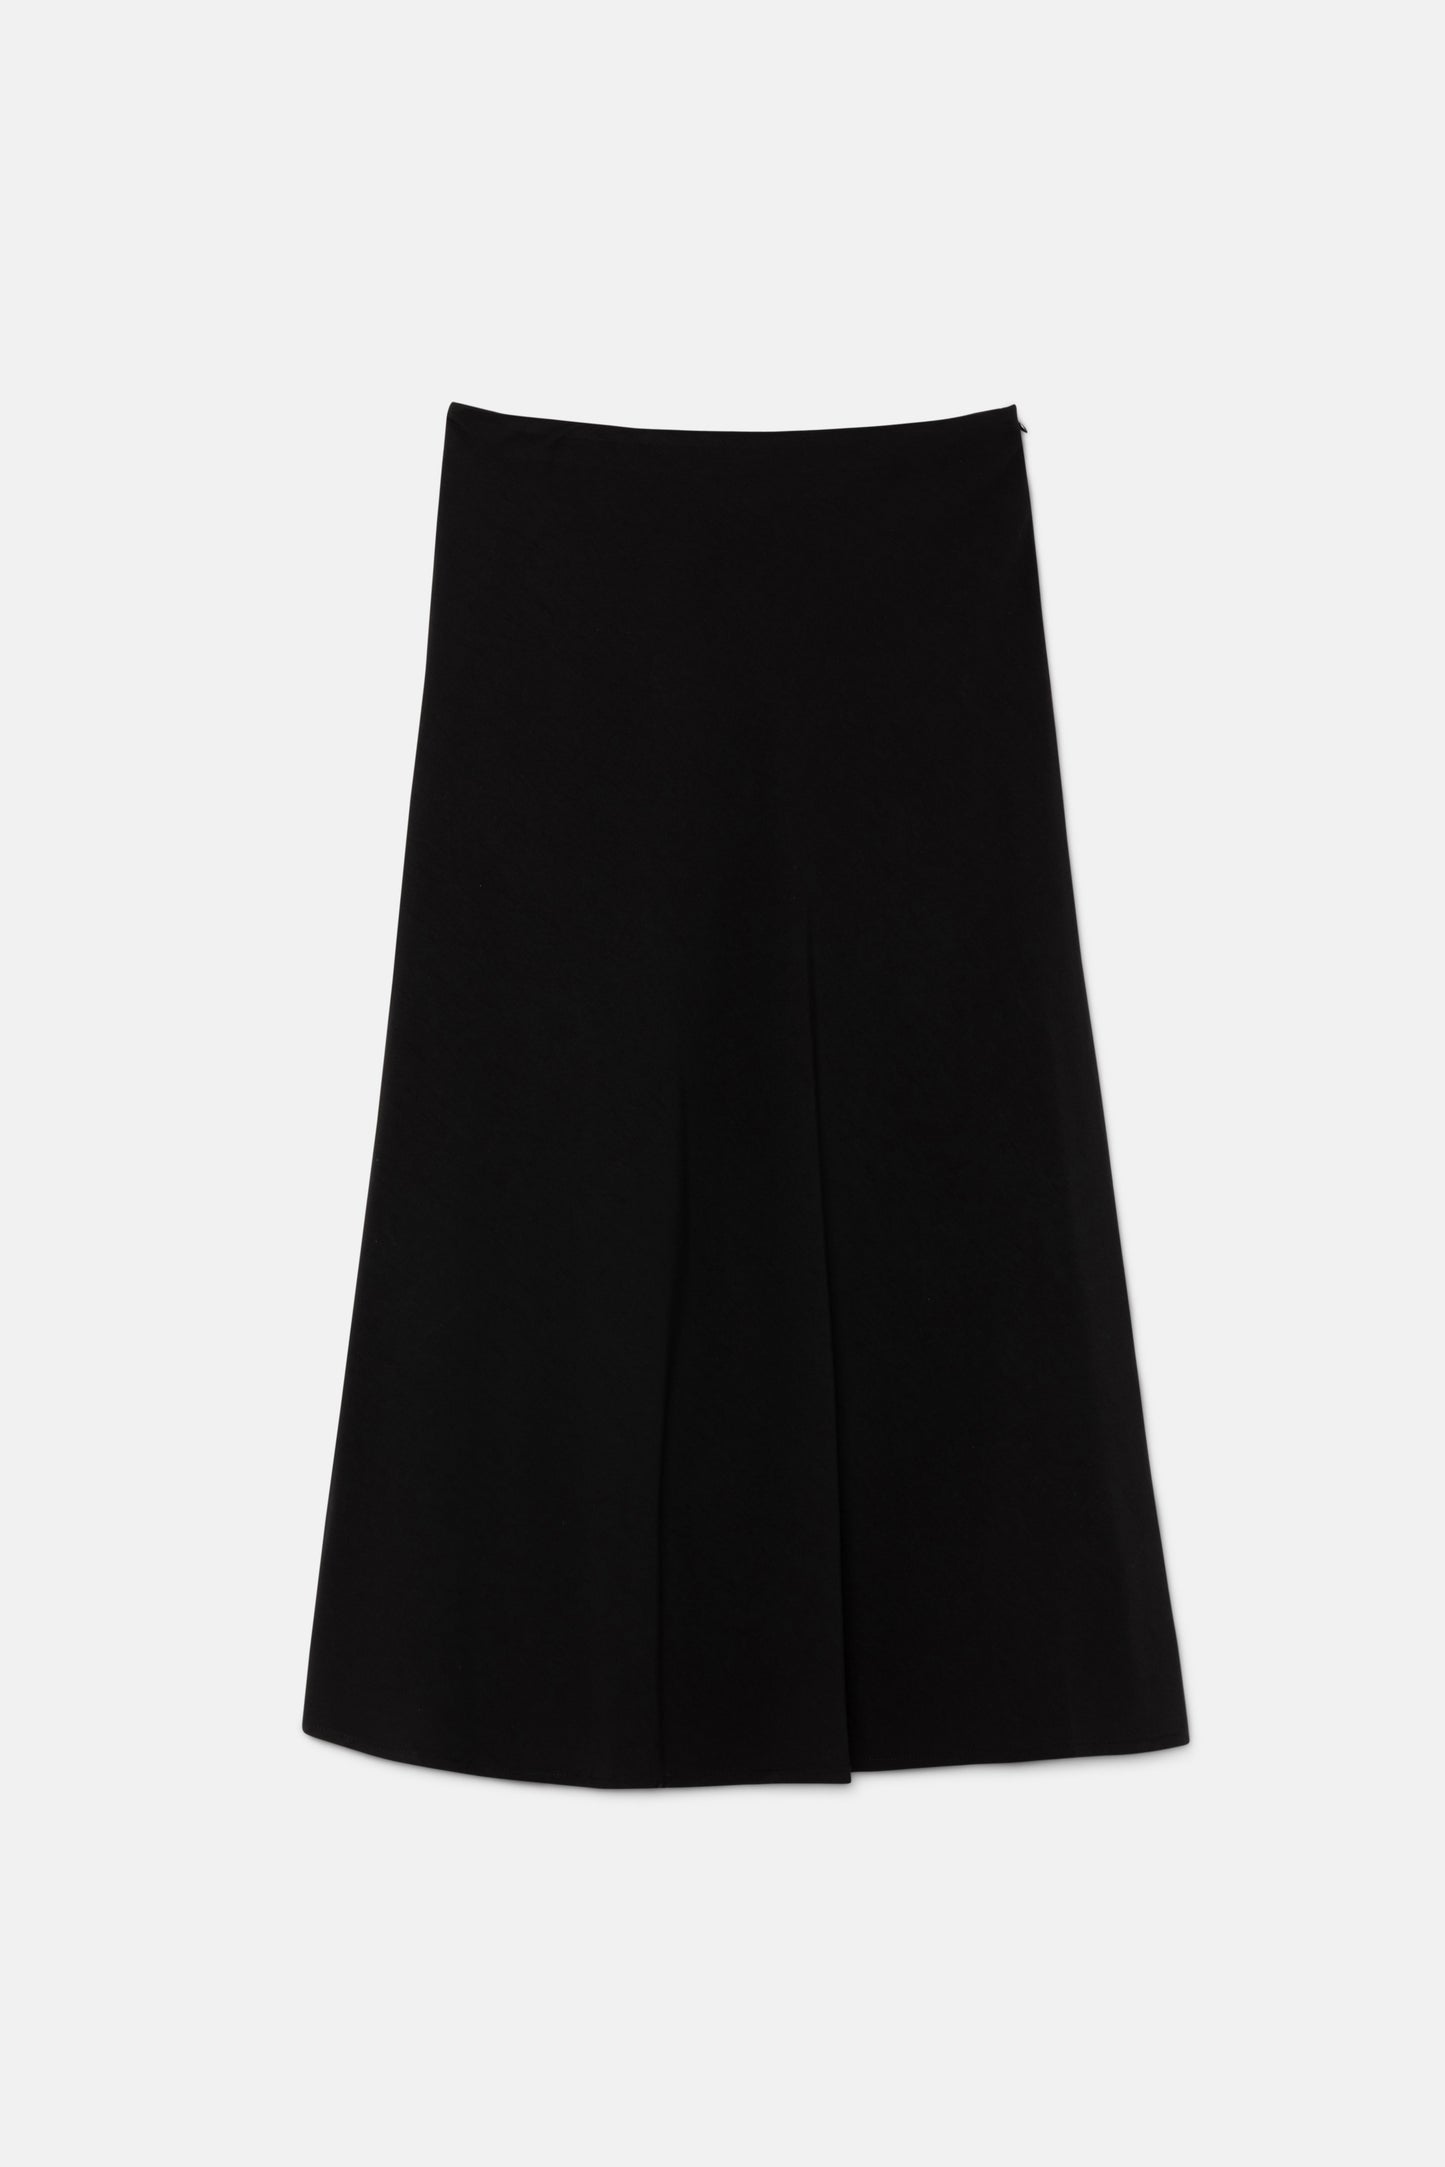 Black crepe flared midi skirt